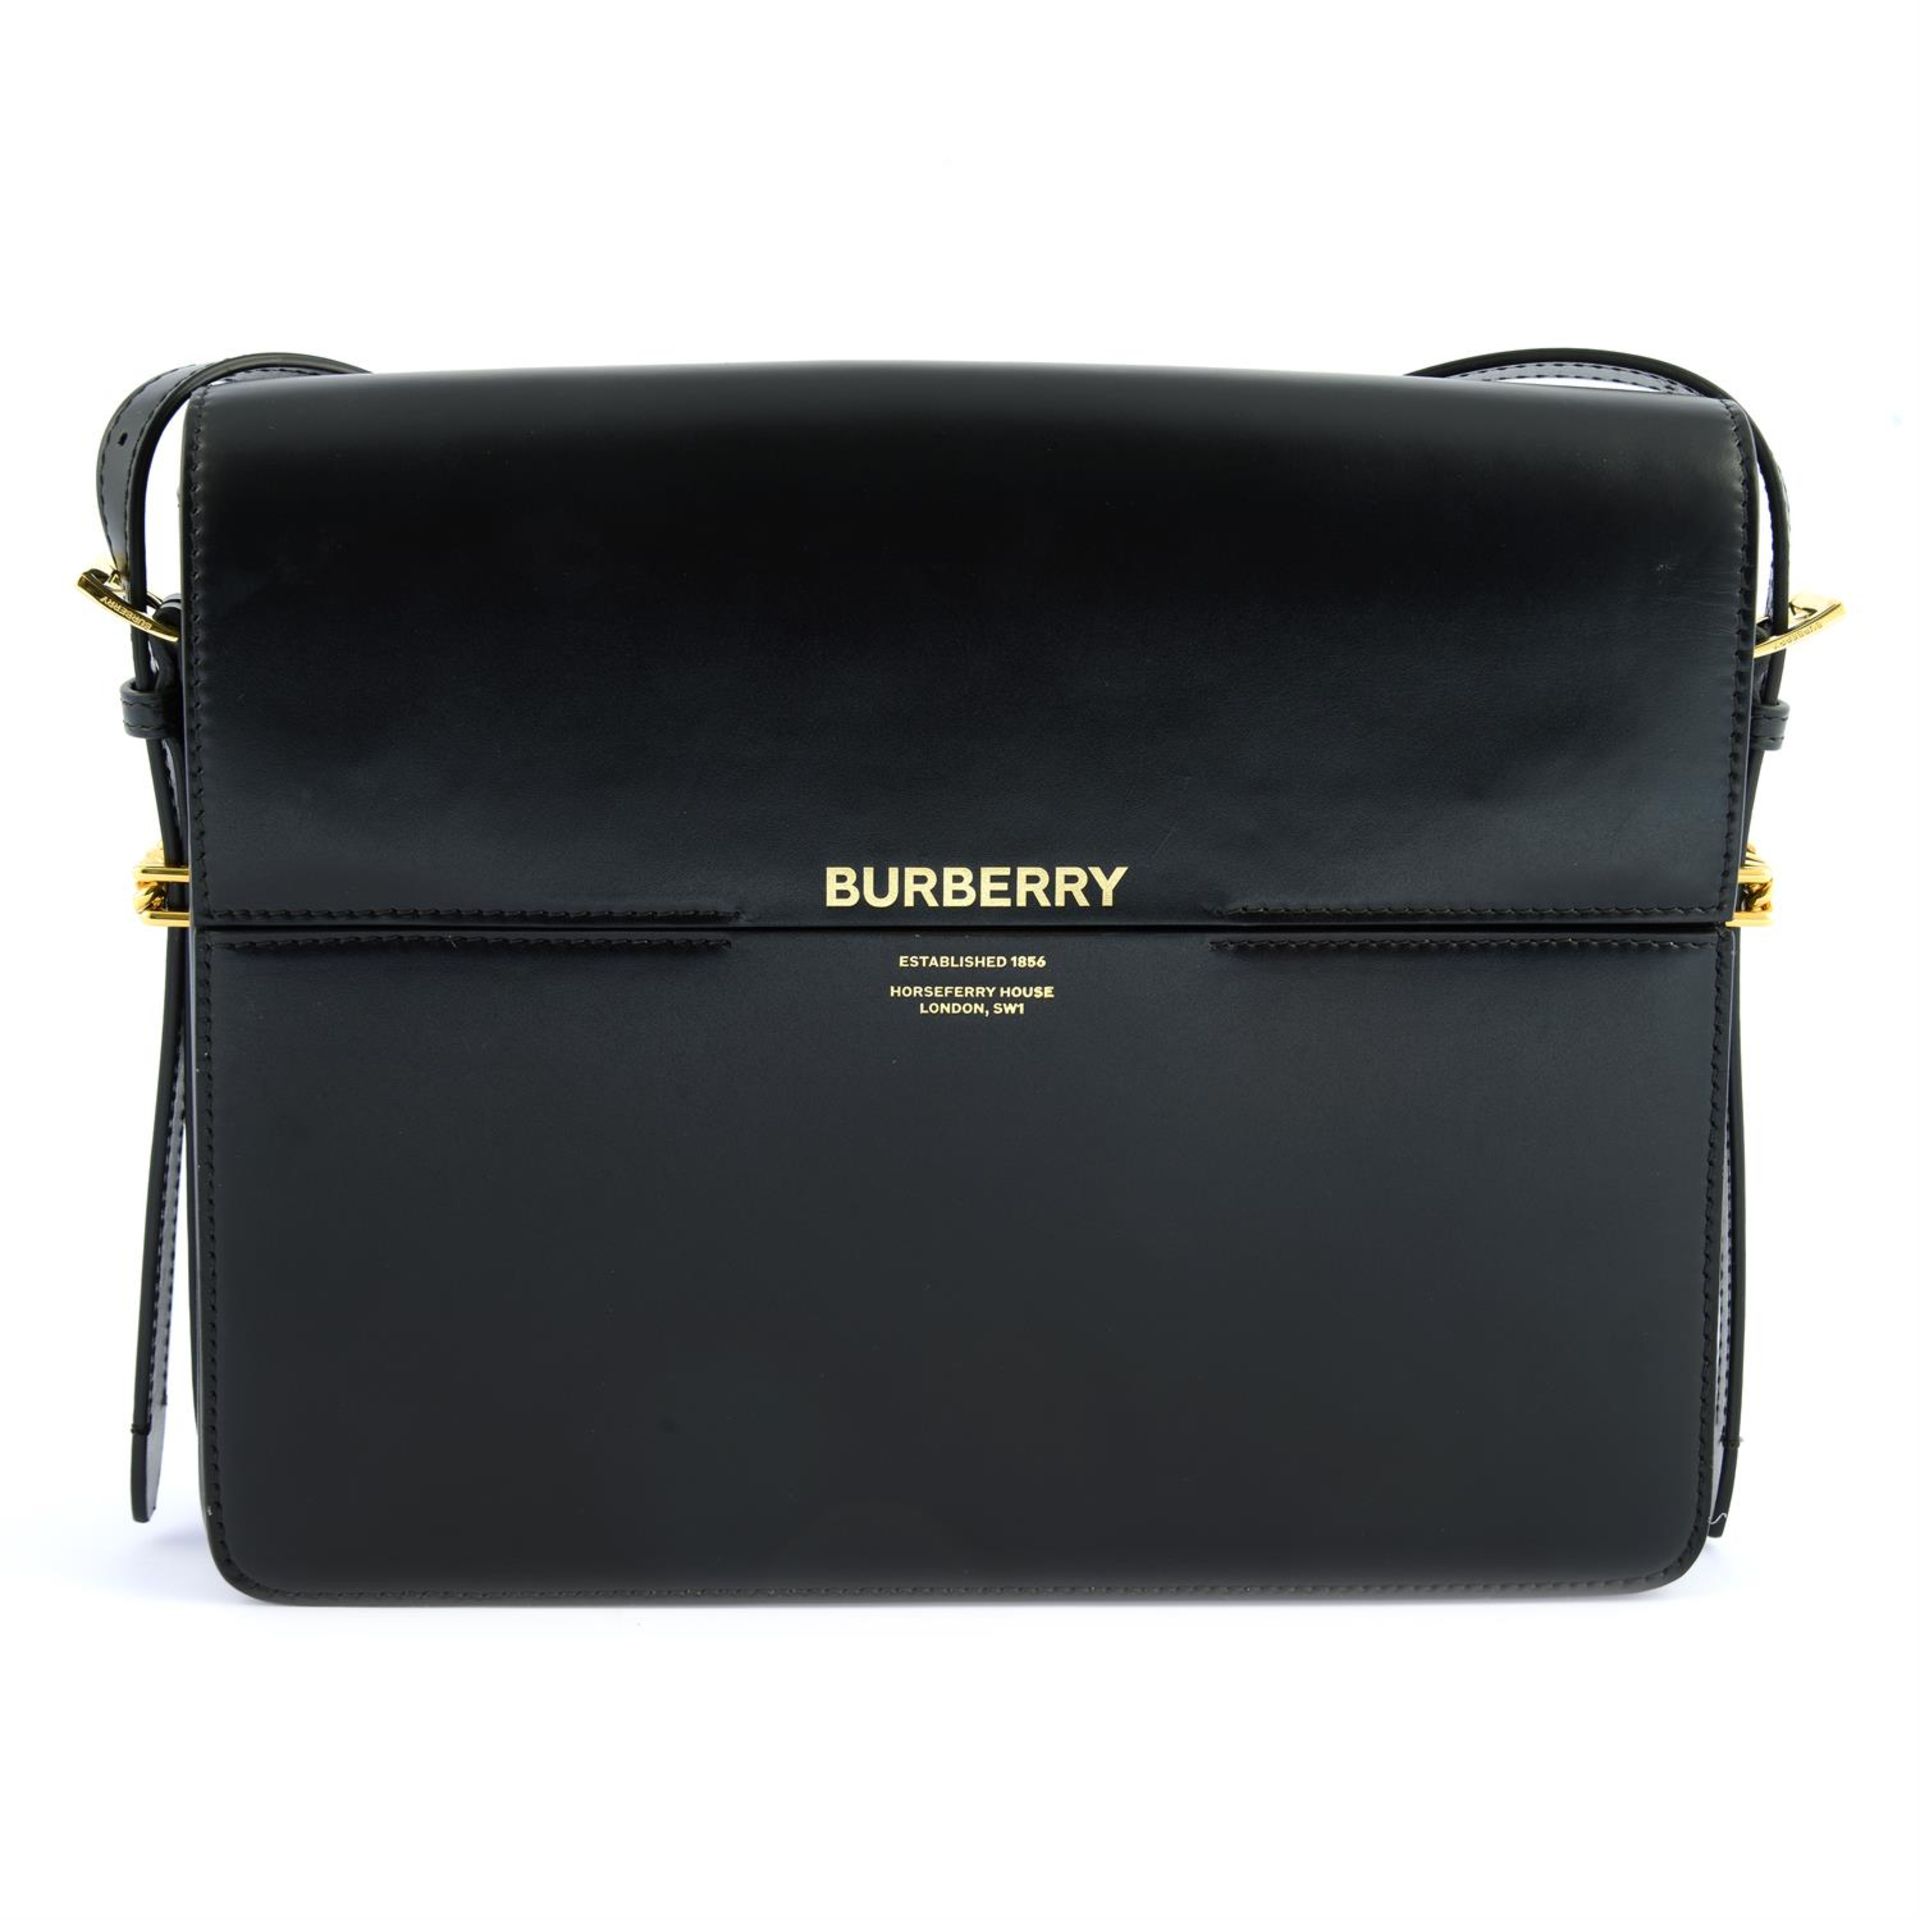 BURBERRY- a black leather handbag.